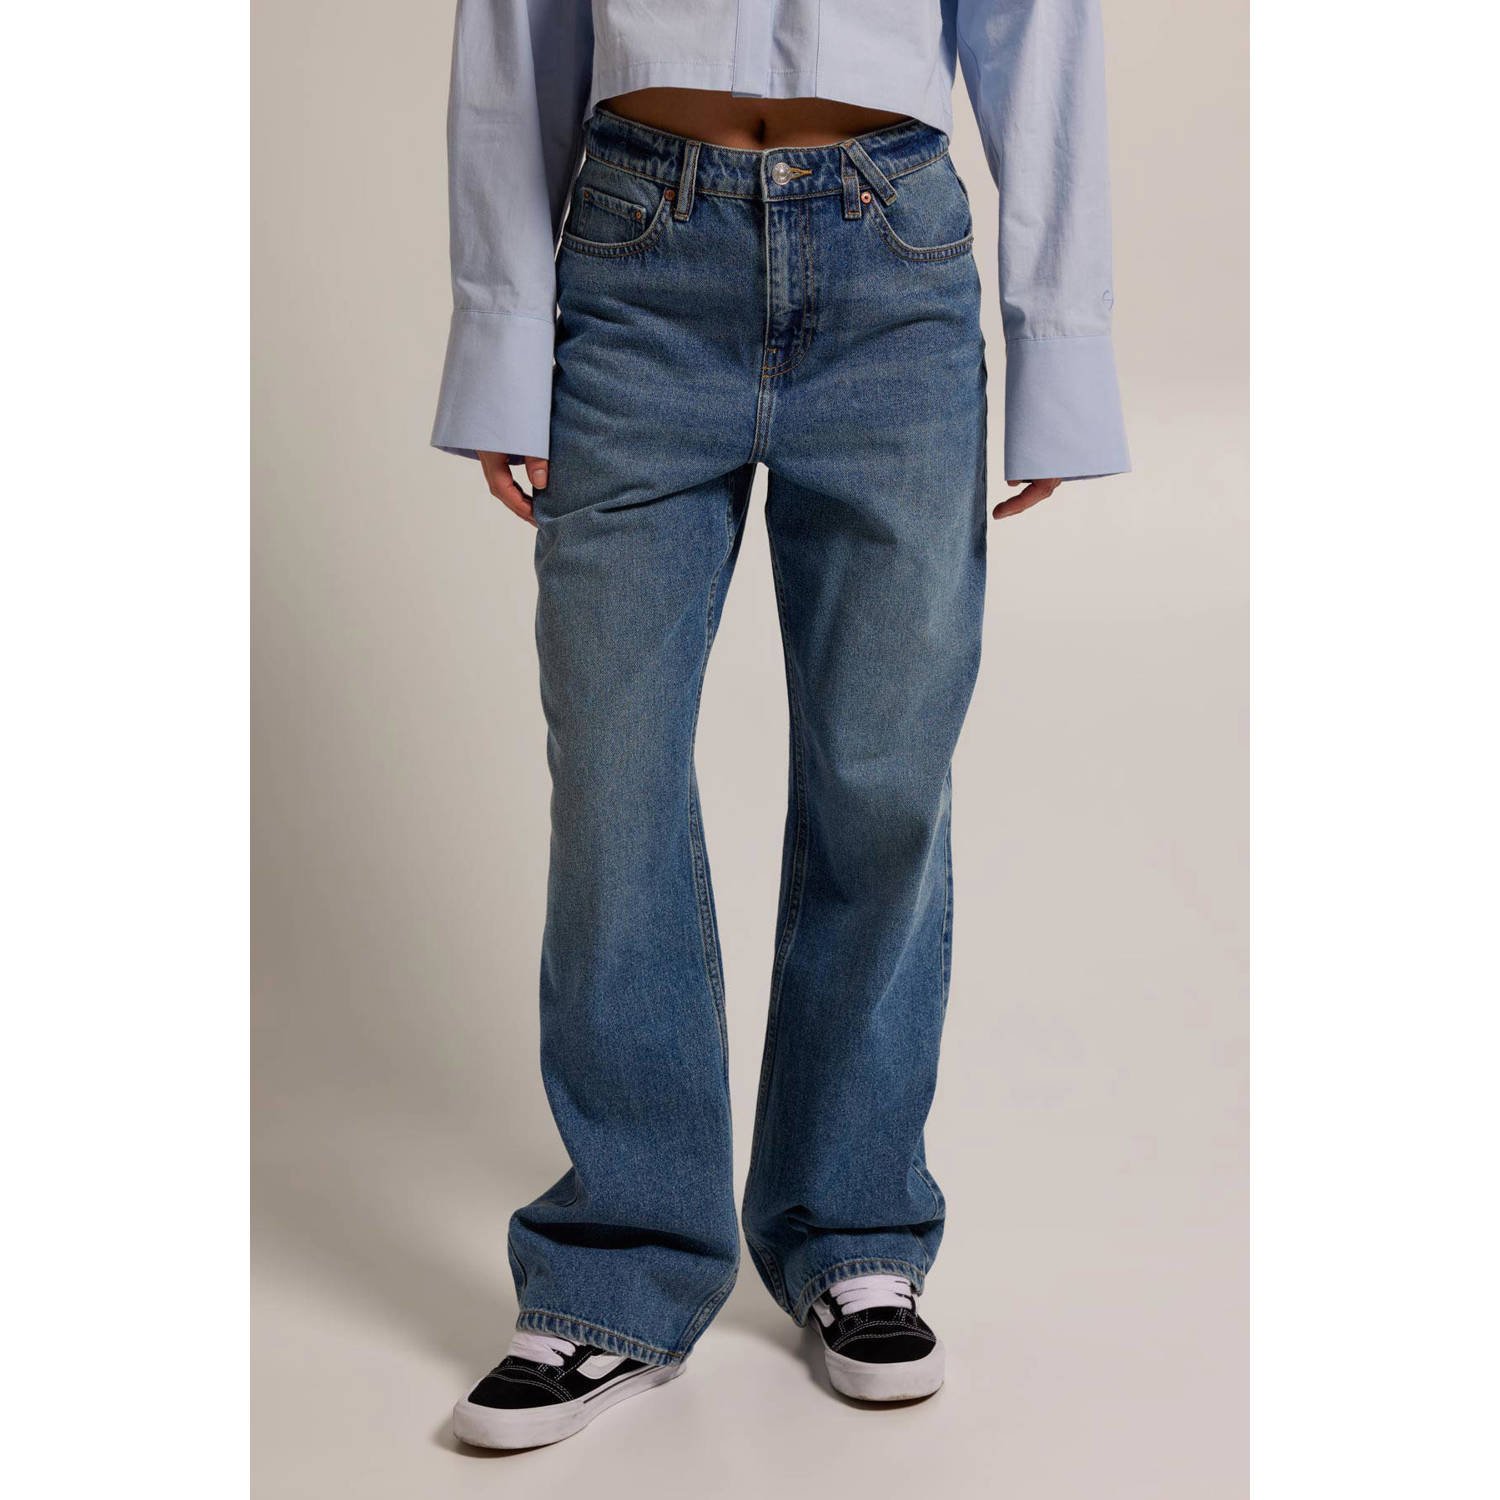 America Today high waist straight jeans Irvine dark blue denim